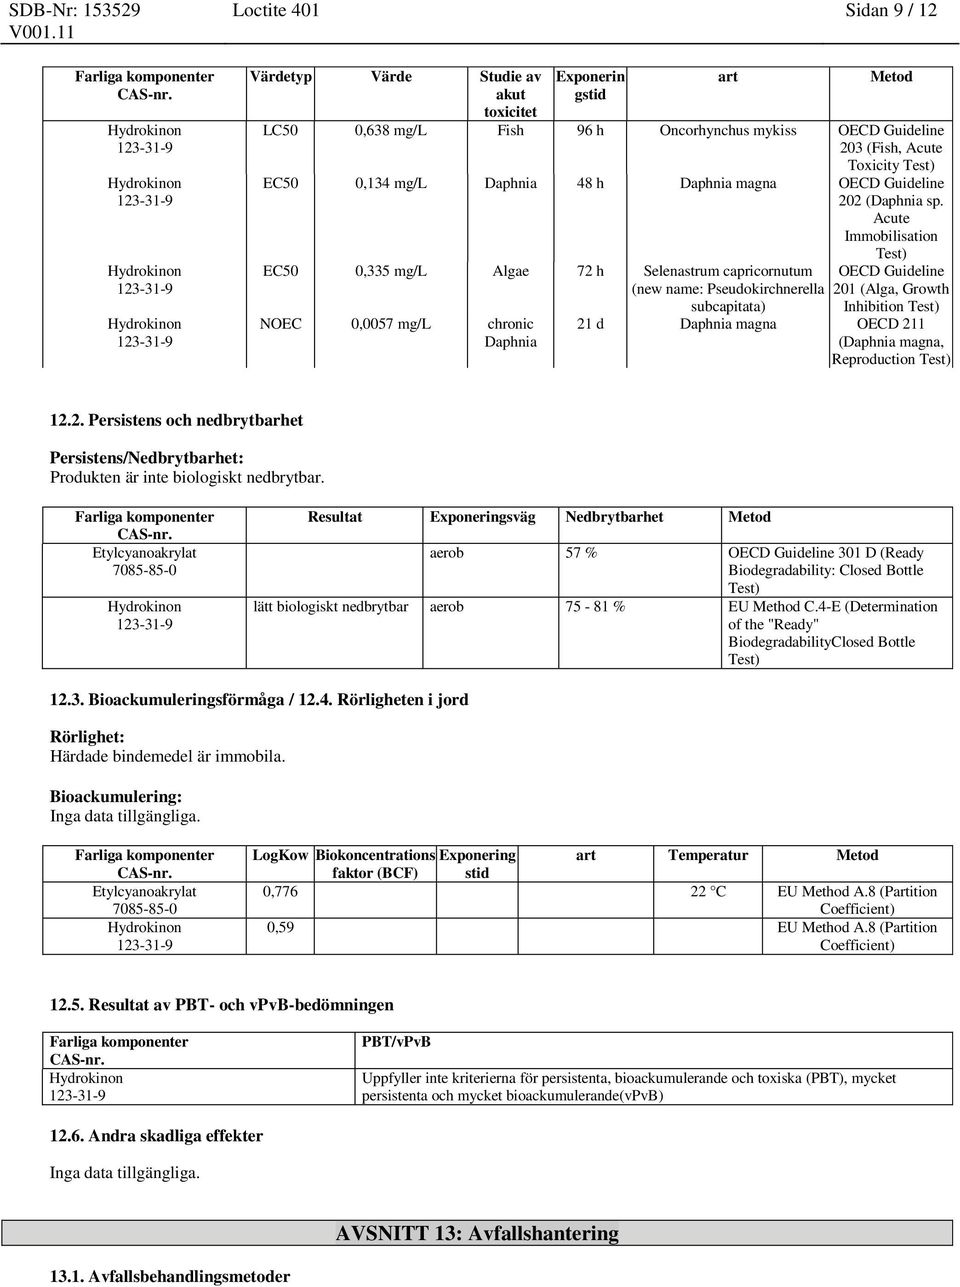 Acute Immobilisation Test) EC50 0,335 mg/l Algae 72 h Selenastrum capricornutum (new name: Pseudokirchnerella subcapitata) NOEC 0,0057 mg/l chronic Daphnia OECD Guideline 201 (Alga, Growth Inhibition